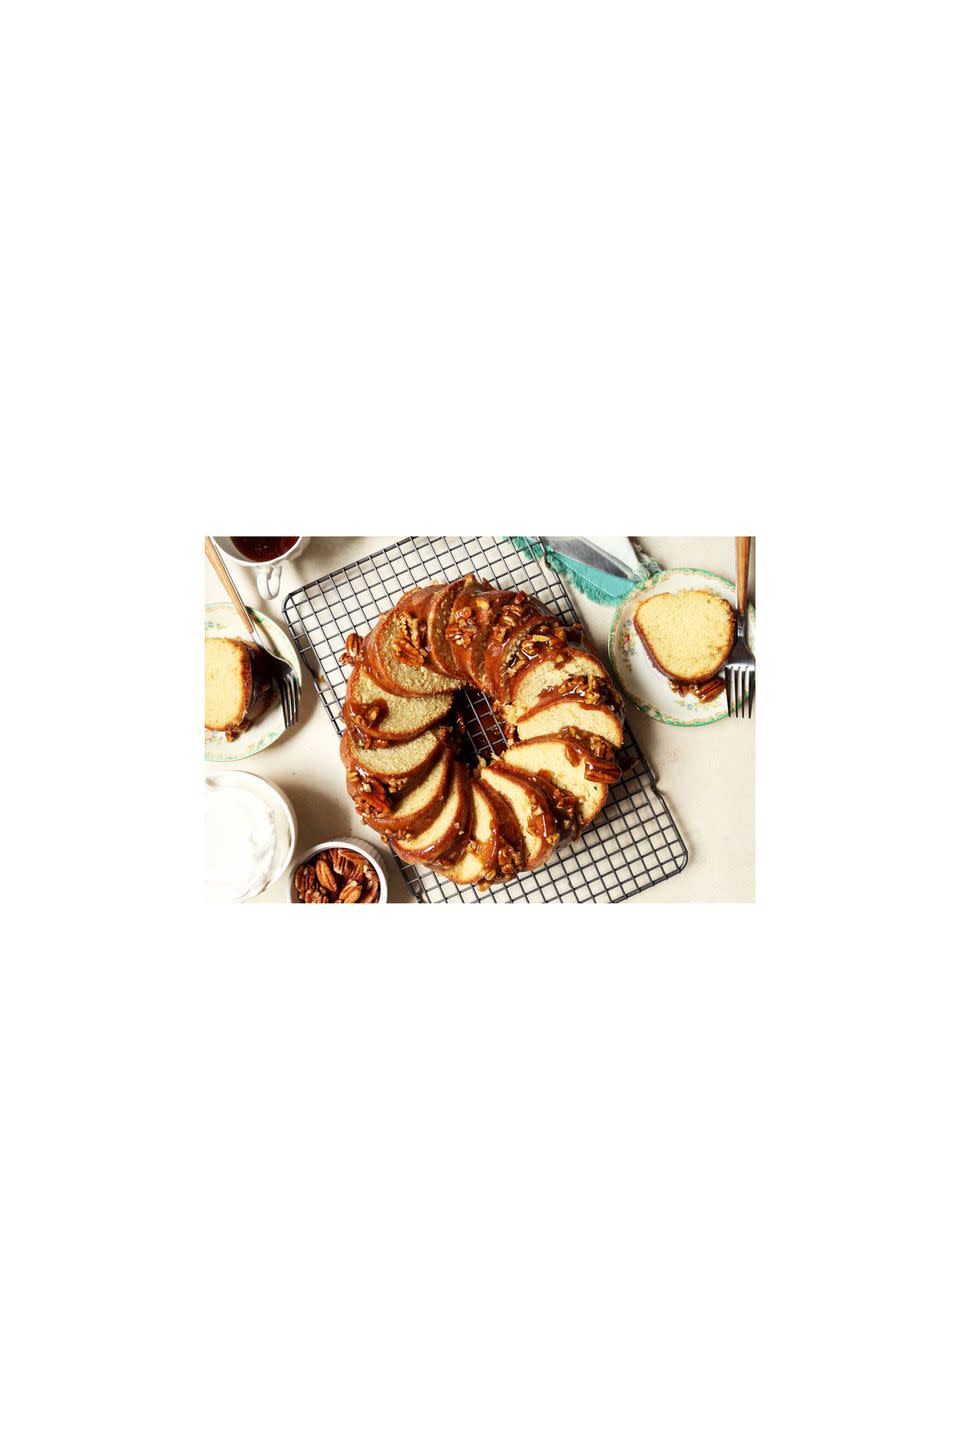 Vanilla Bean Bundt Cake with Pecan Praline Glaze